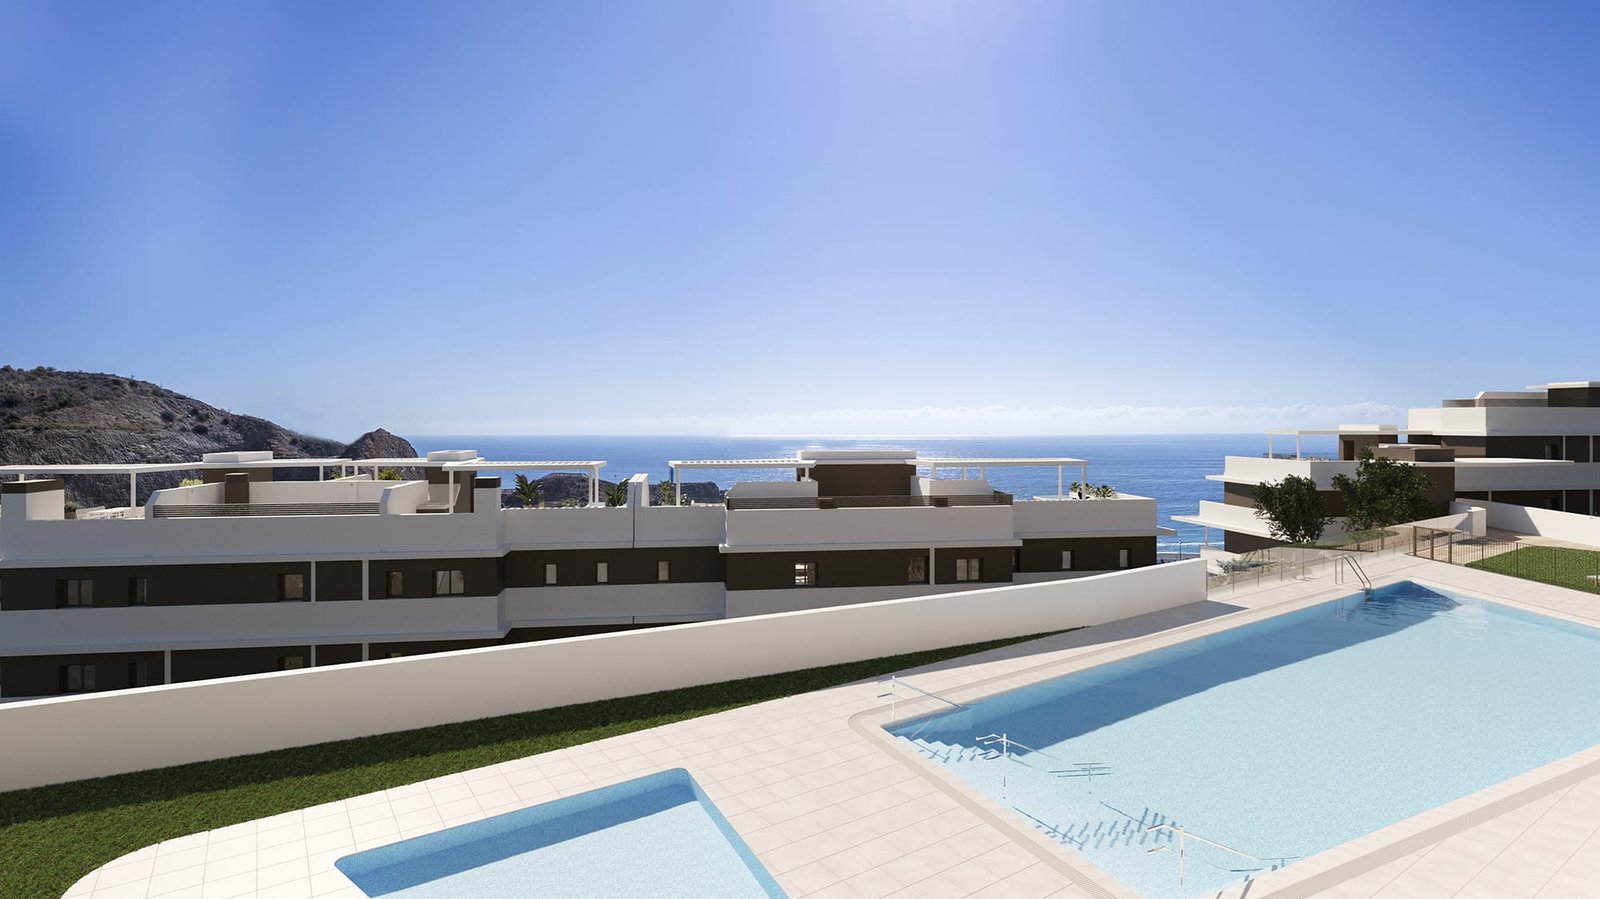 Idilia Senses New Apartments Malaga 5 Real Estate Marbella